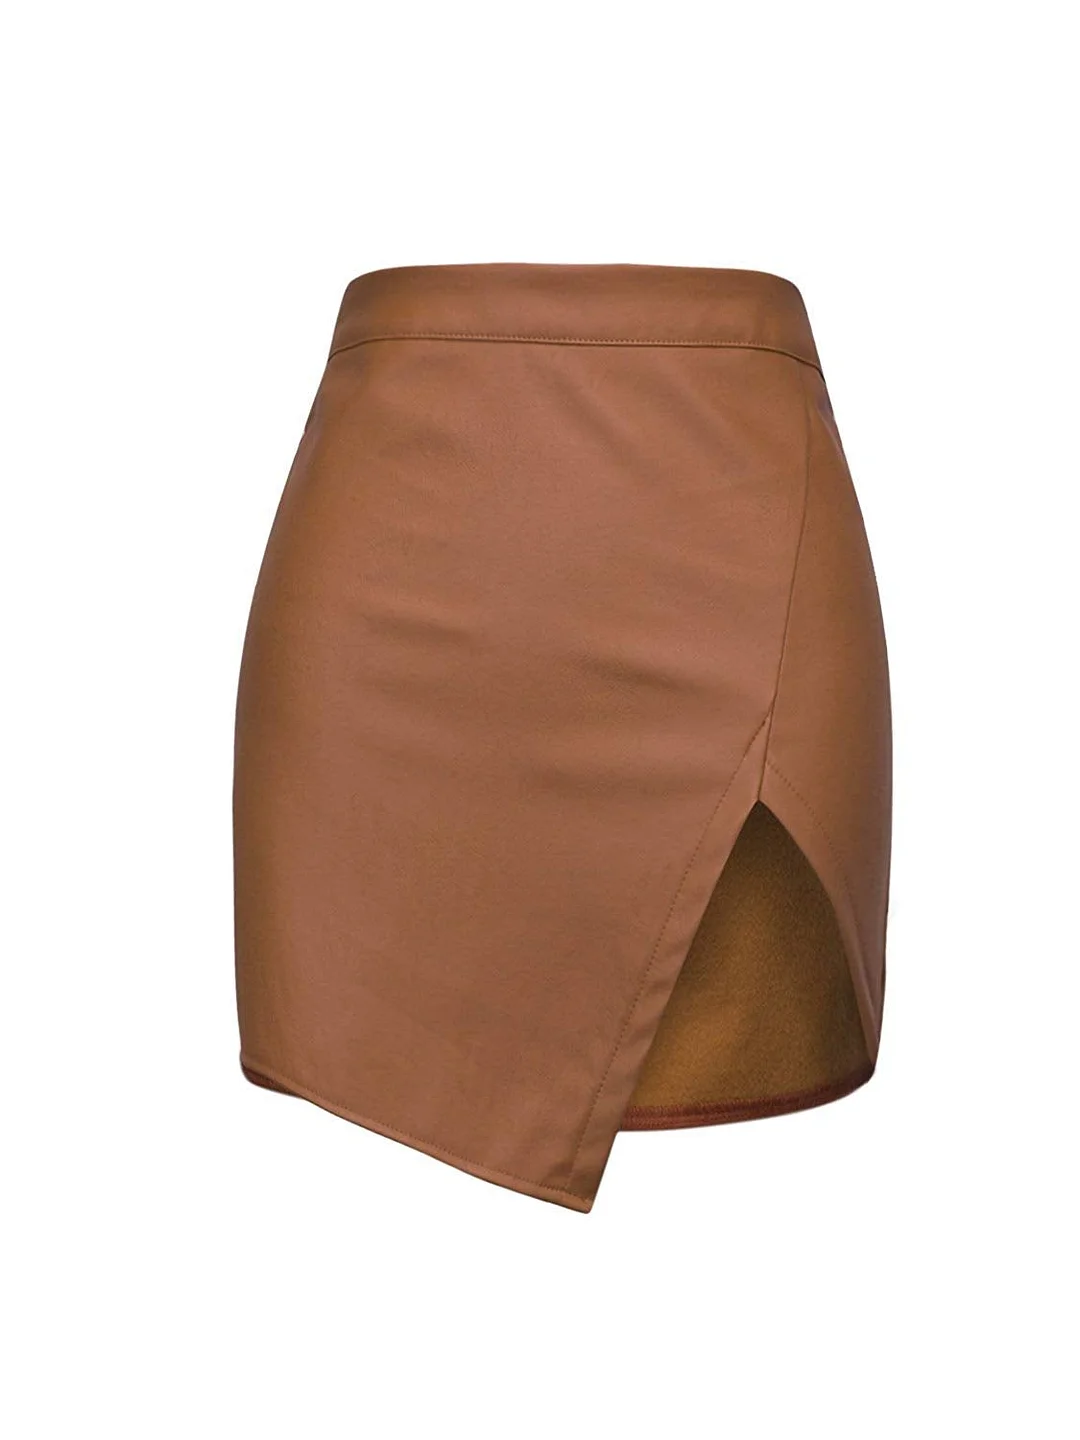 Women's Black Cut Out Mid Waist Asymmetric Hem PU Mini Skirt